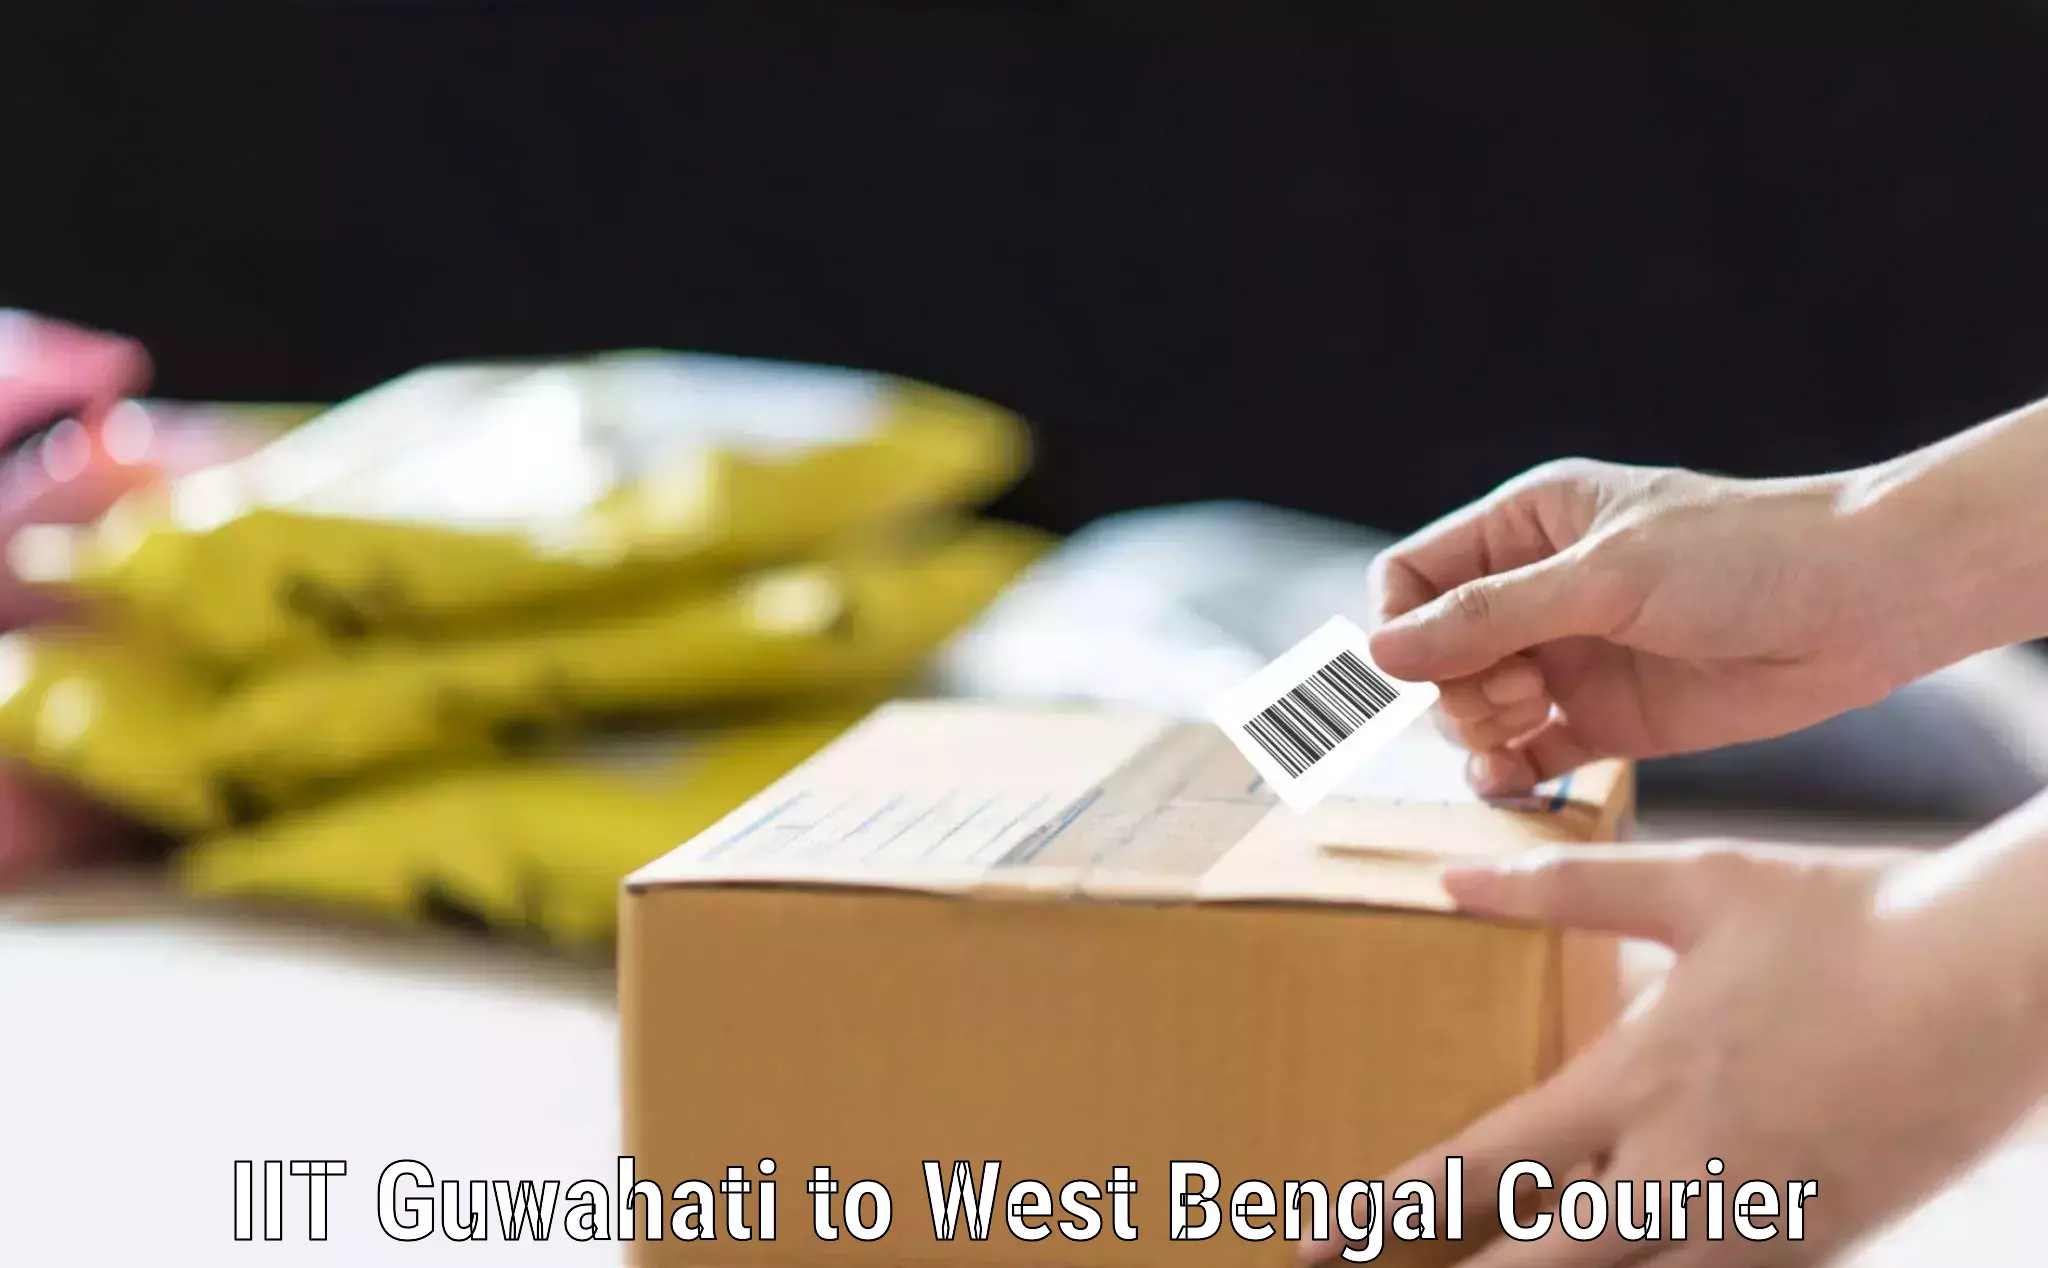 Doorstep luggage pickup in IIT Guwahati to West Bengal